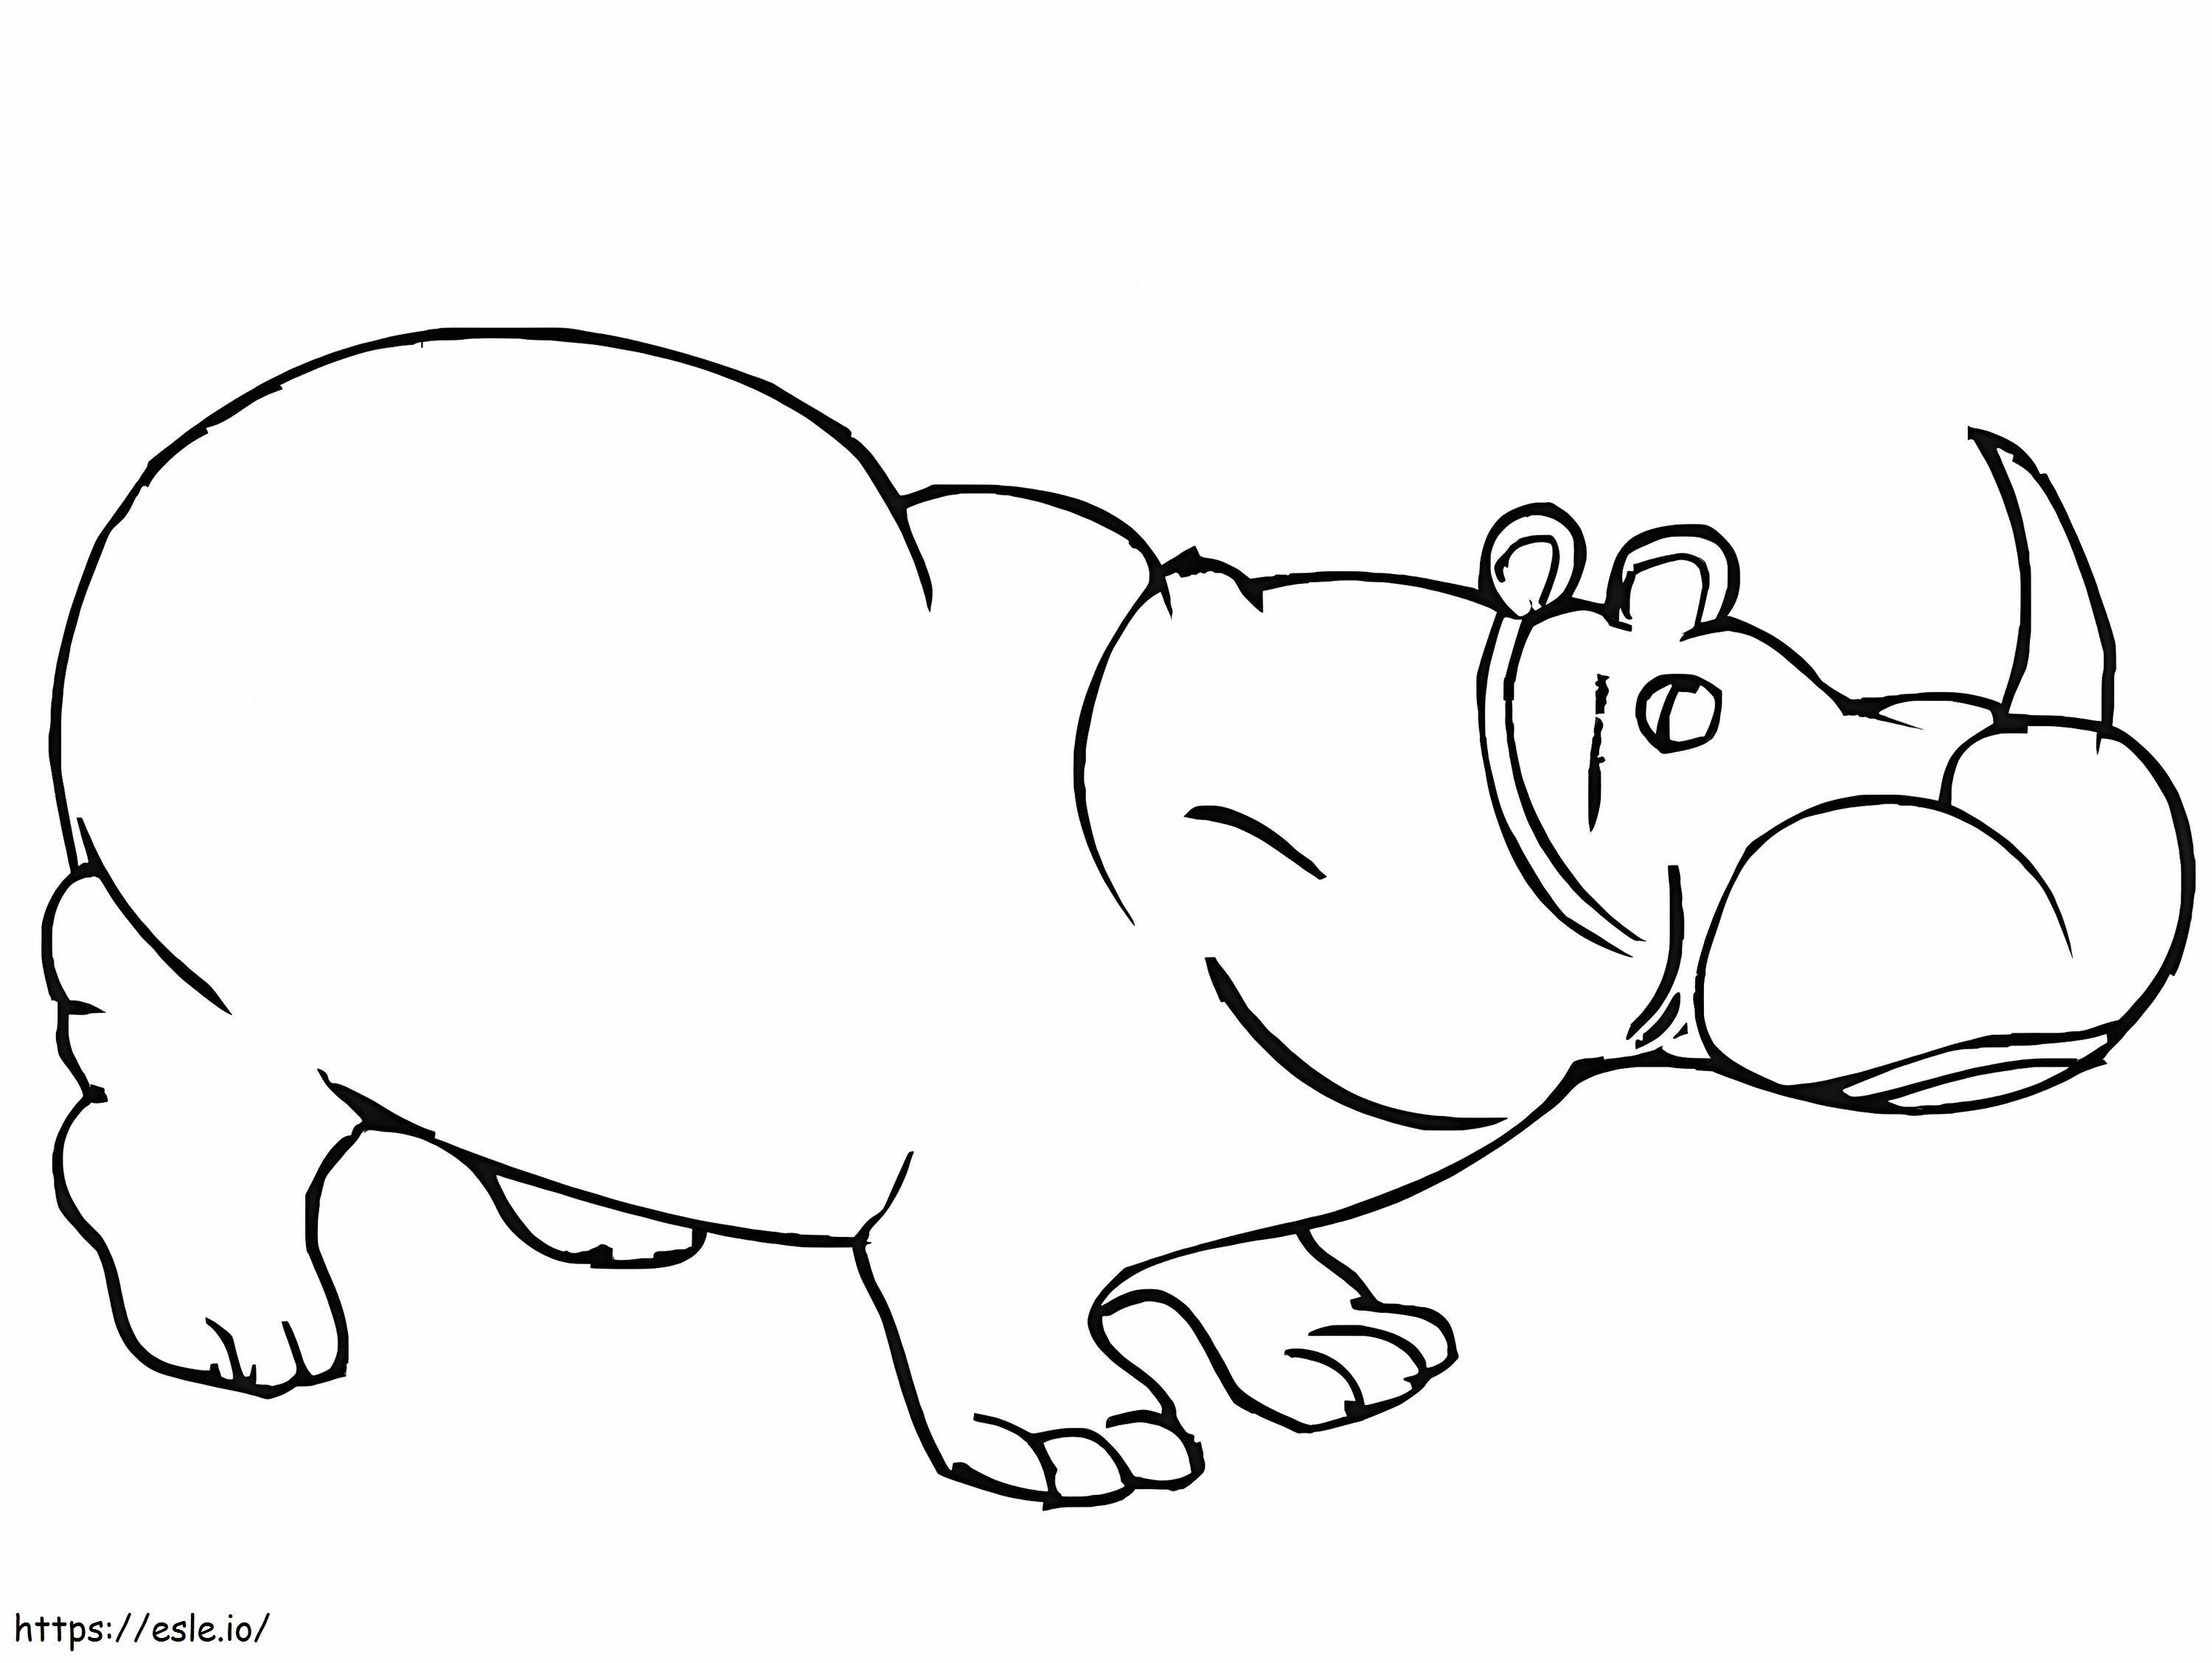 Rhino coloring page